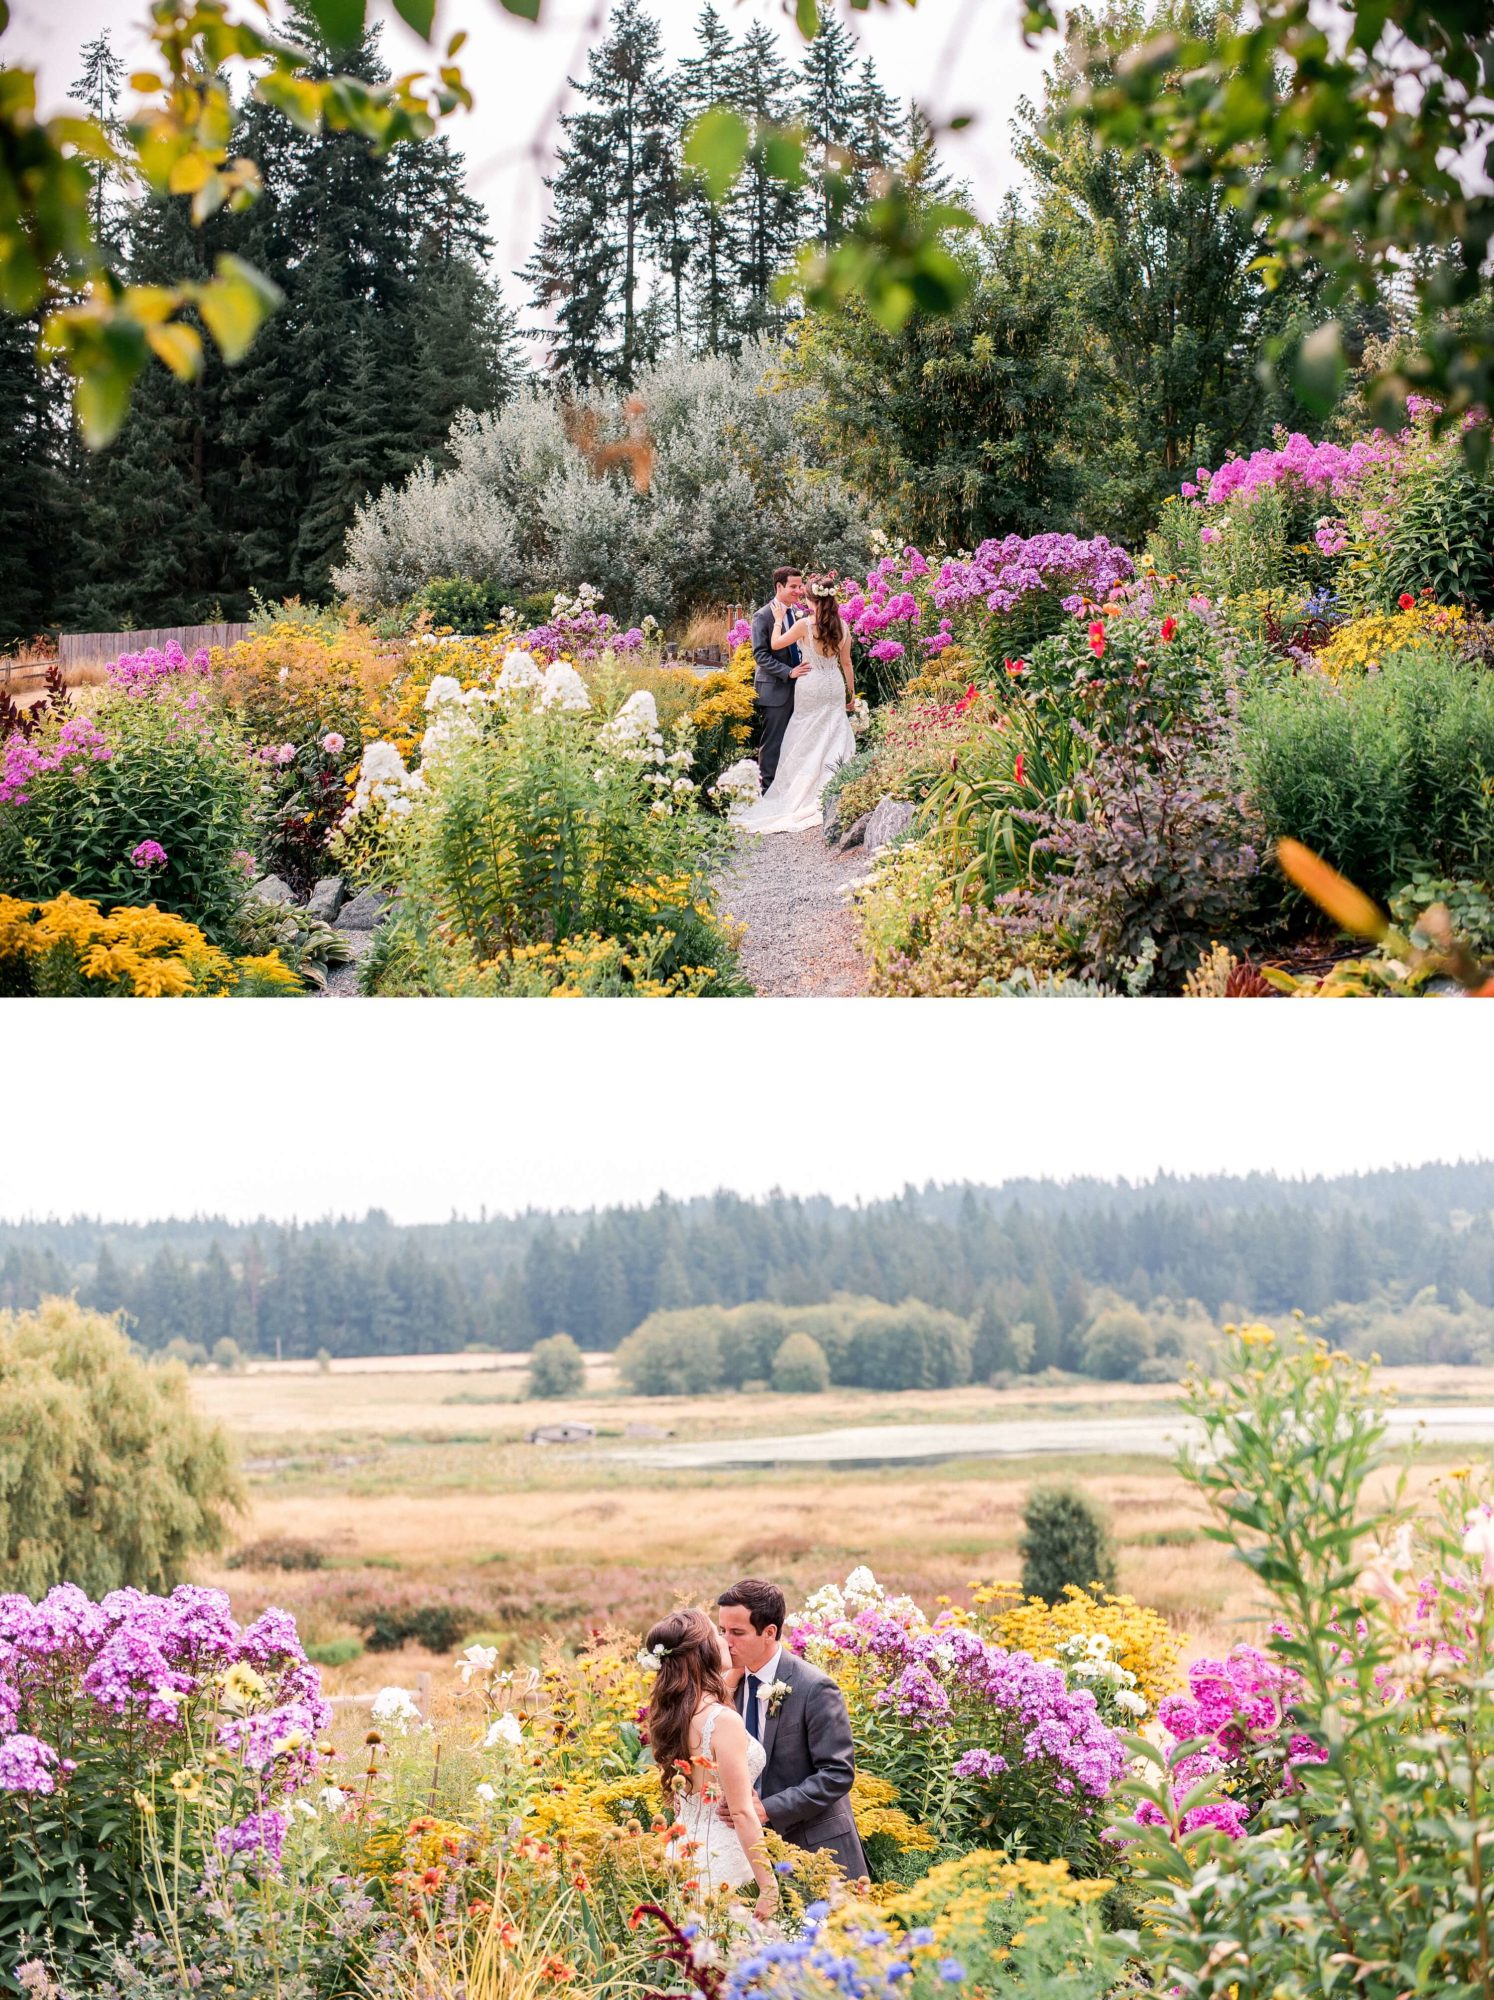 Bride and groom enjoying intimate flower garden after wedding ceremony